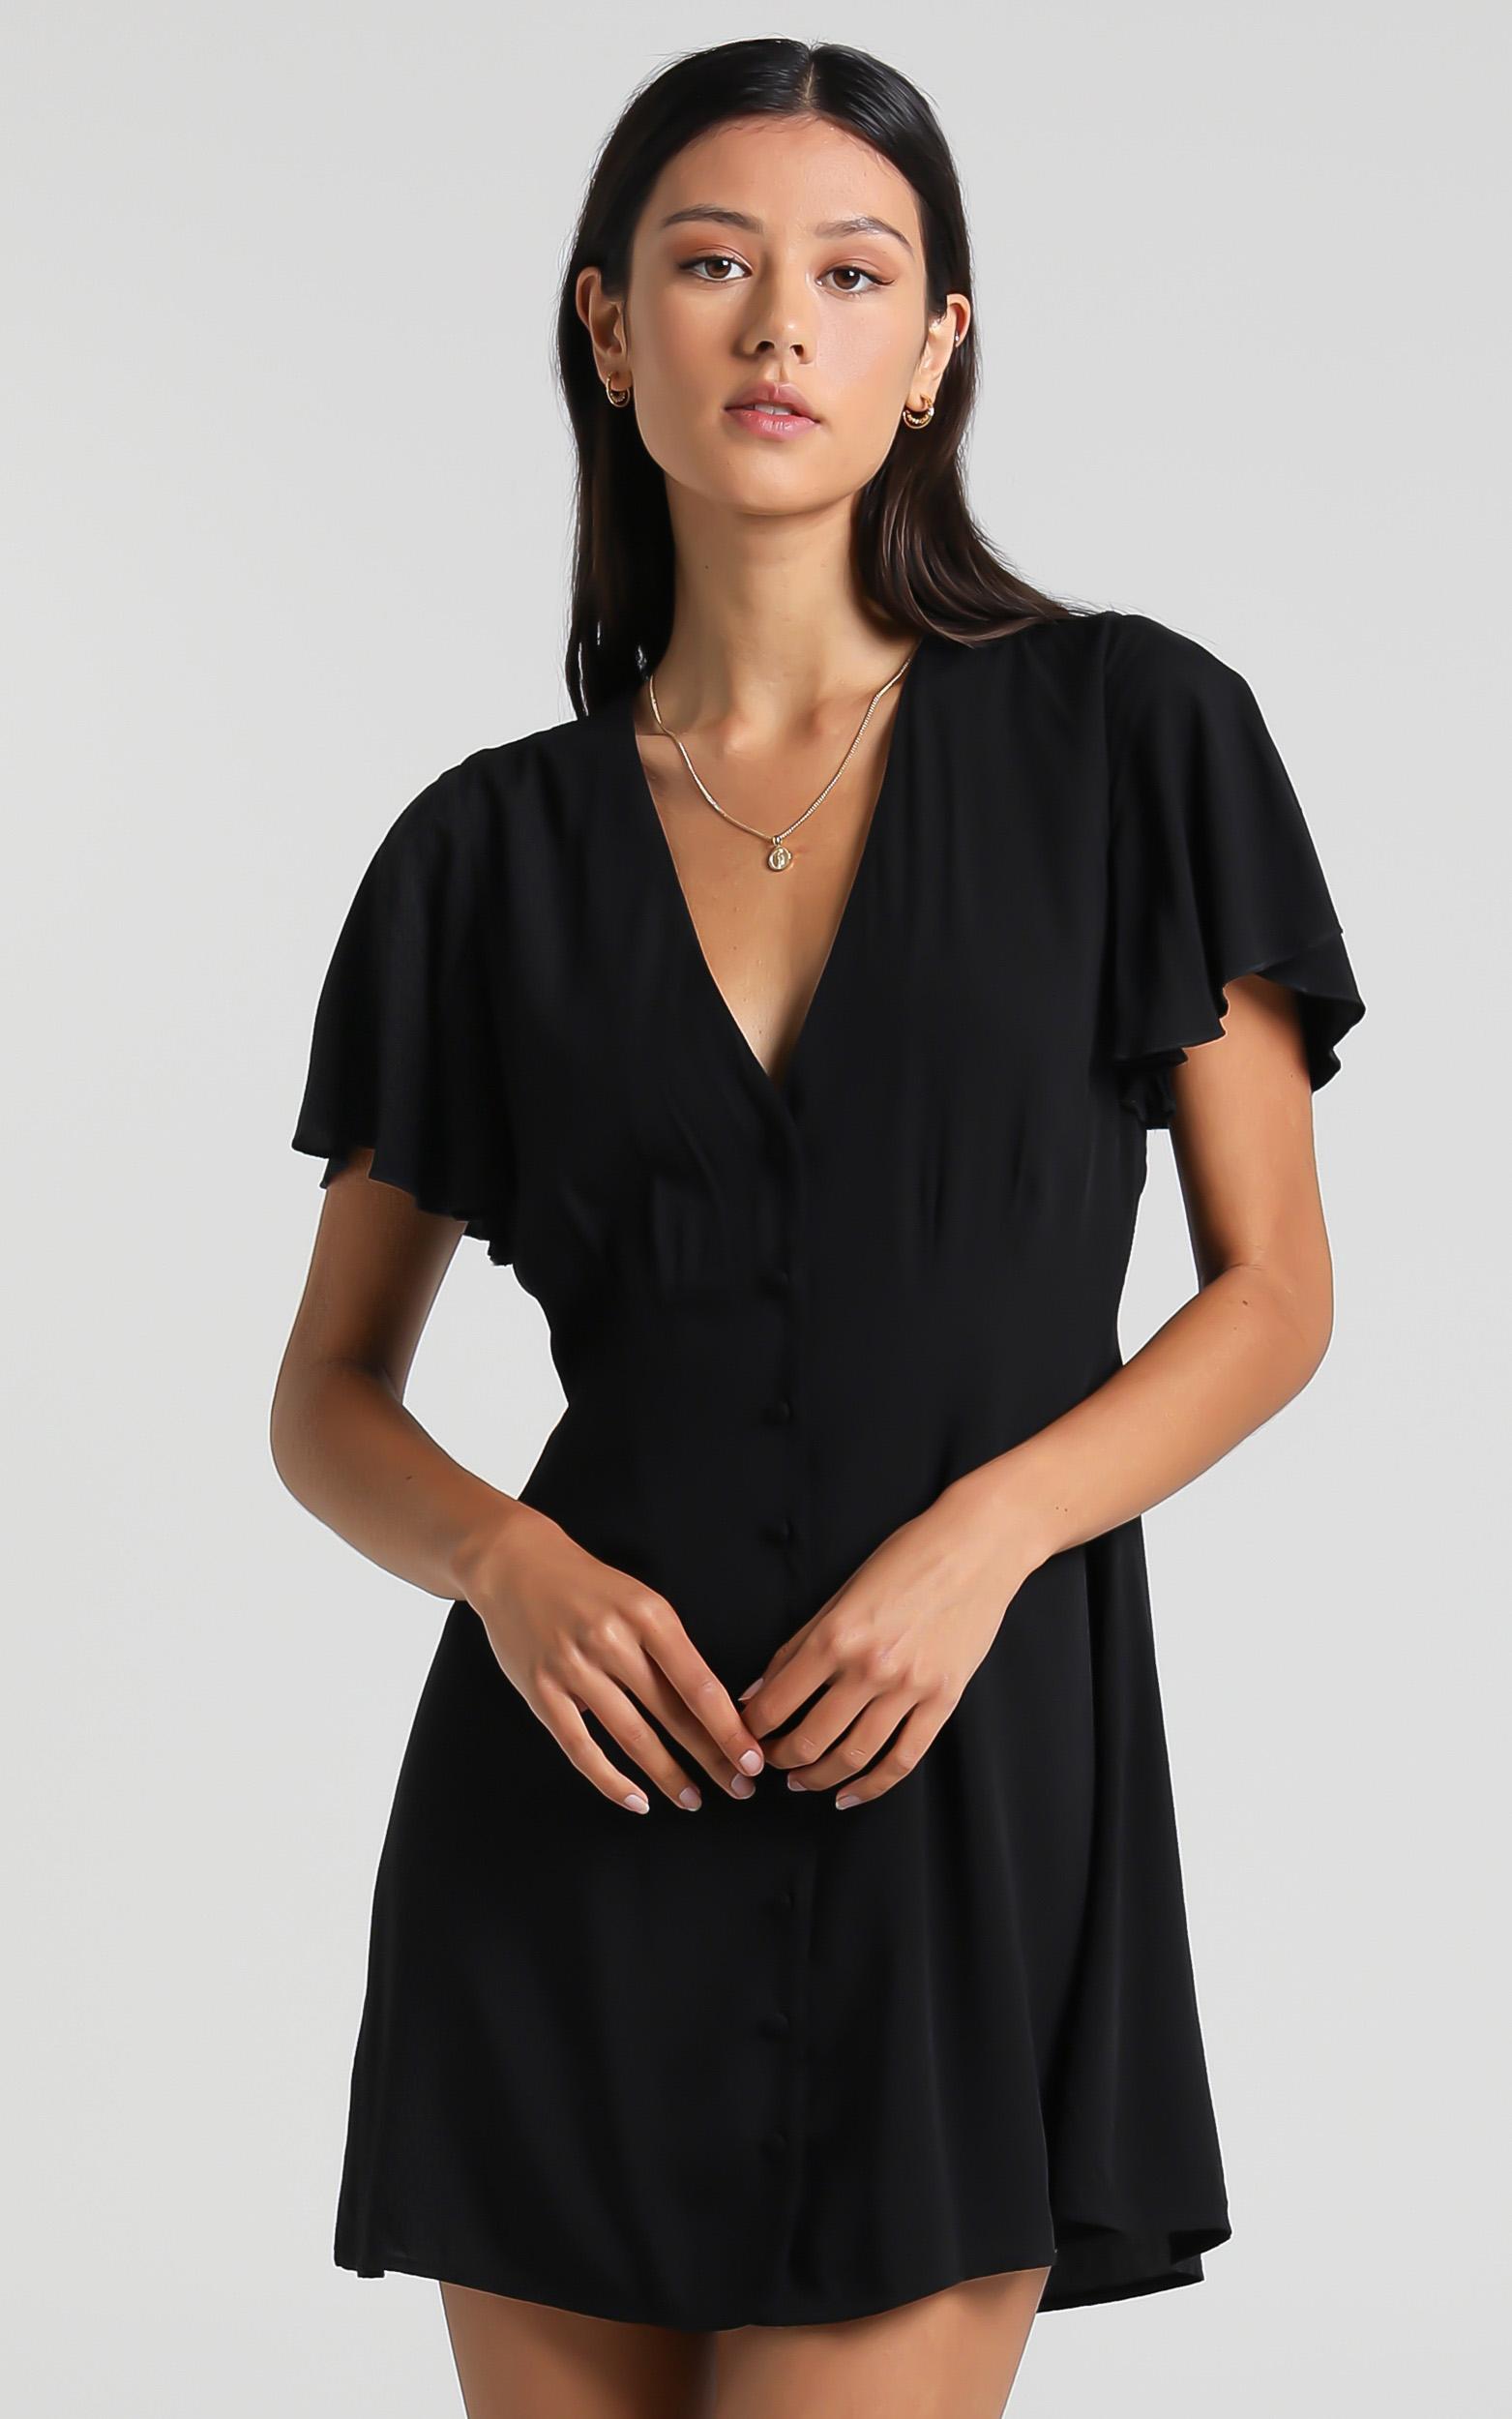 Daiquiri Dress in Black - 6 (XS), Black, hi-res image number null